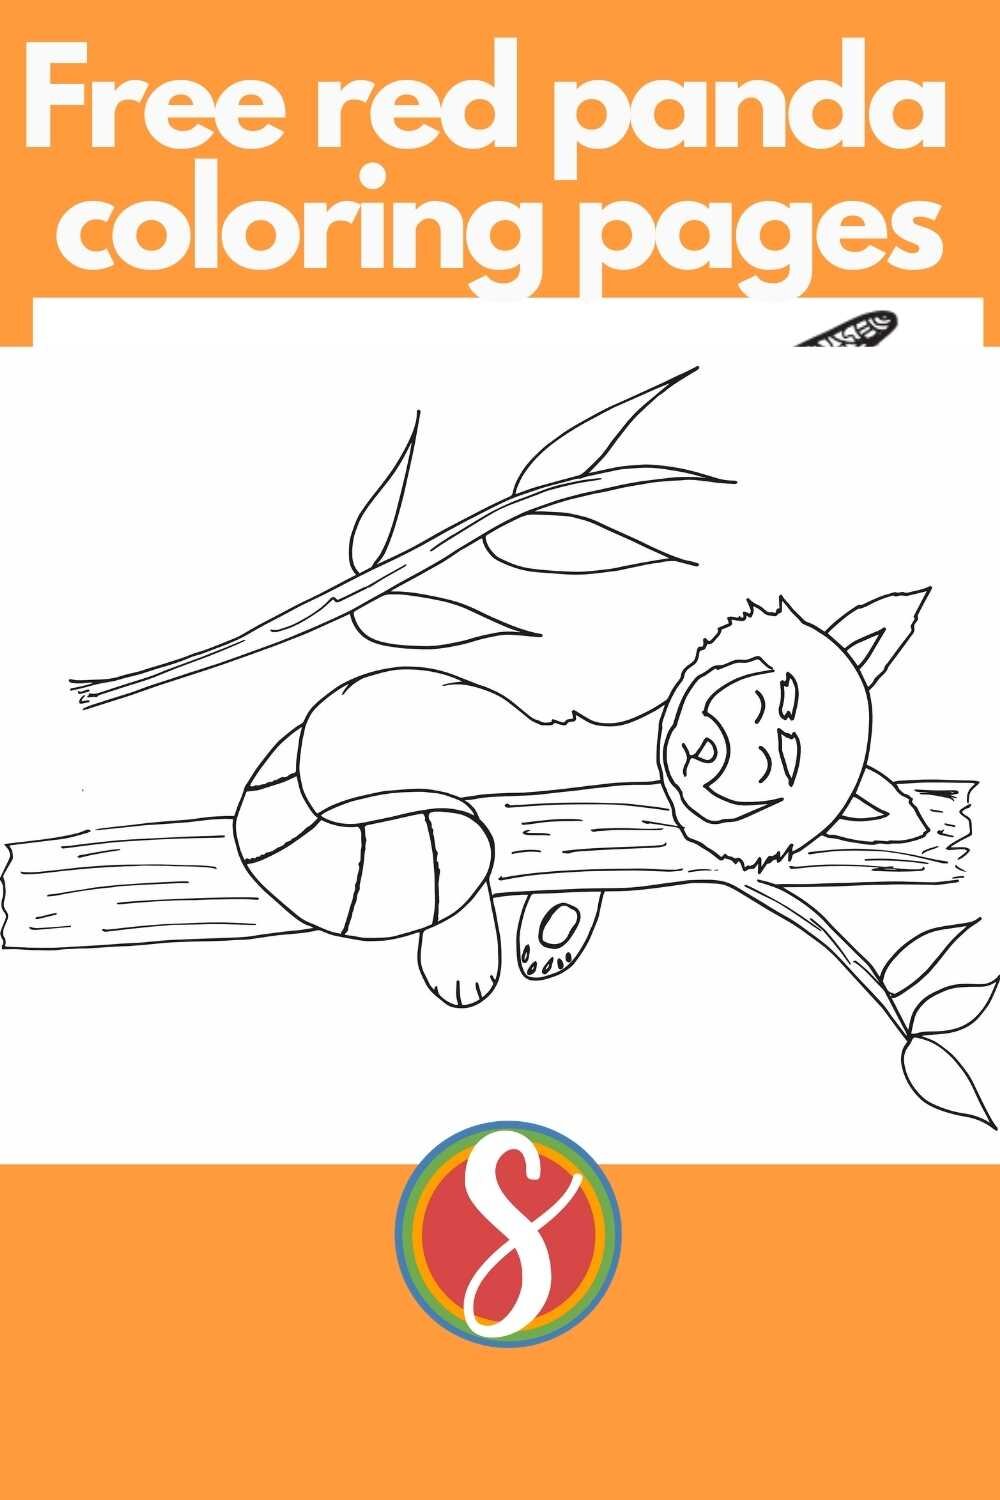 A free printable napping red panda coloring page - great kids coloring page for red panda lovers